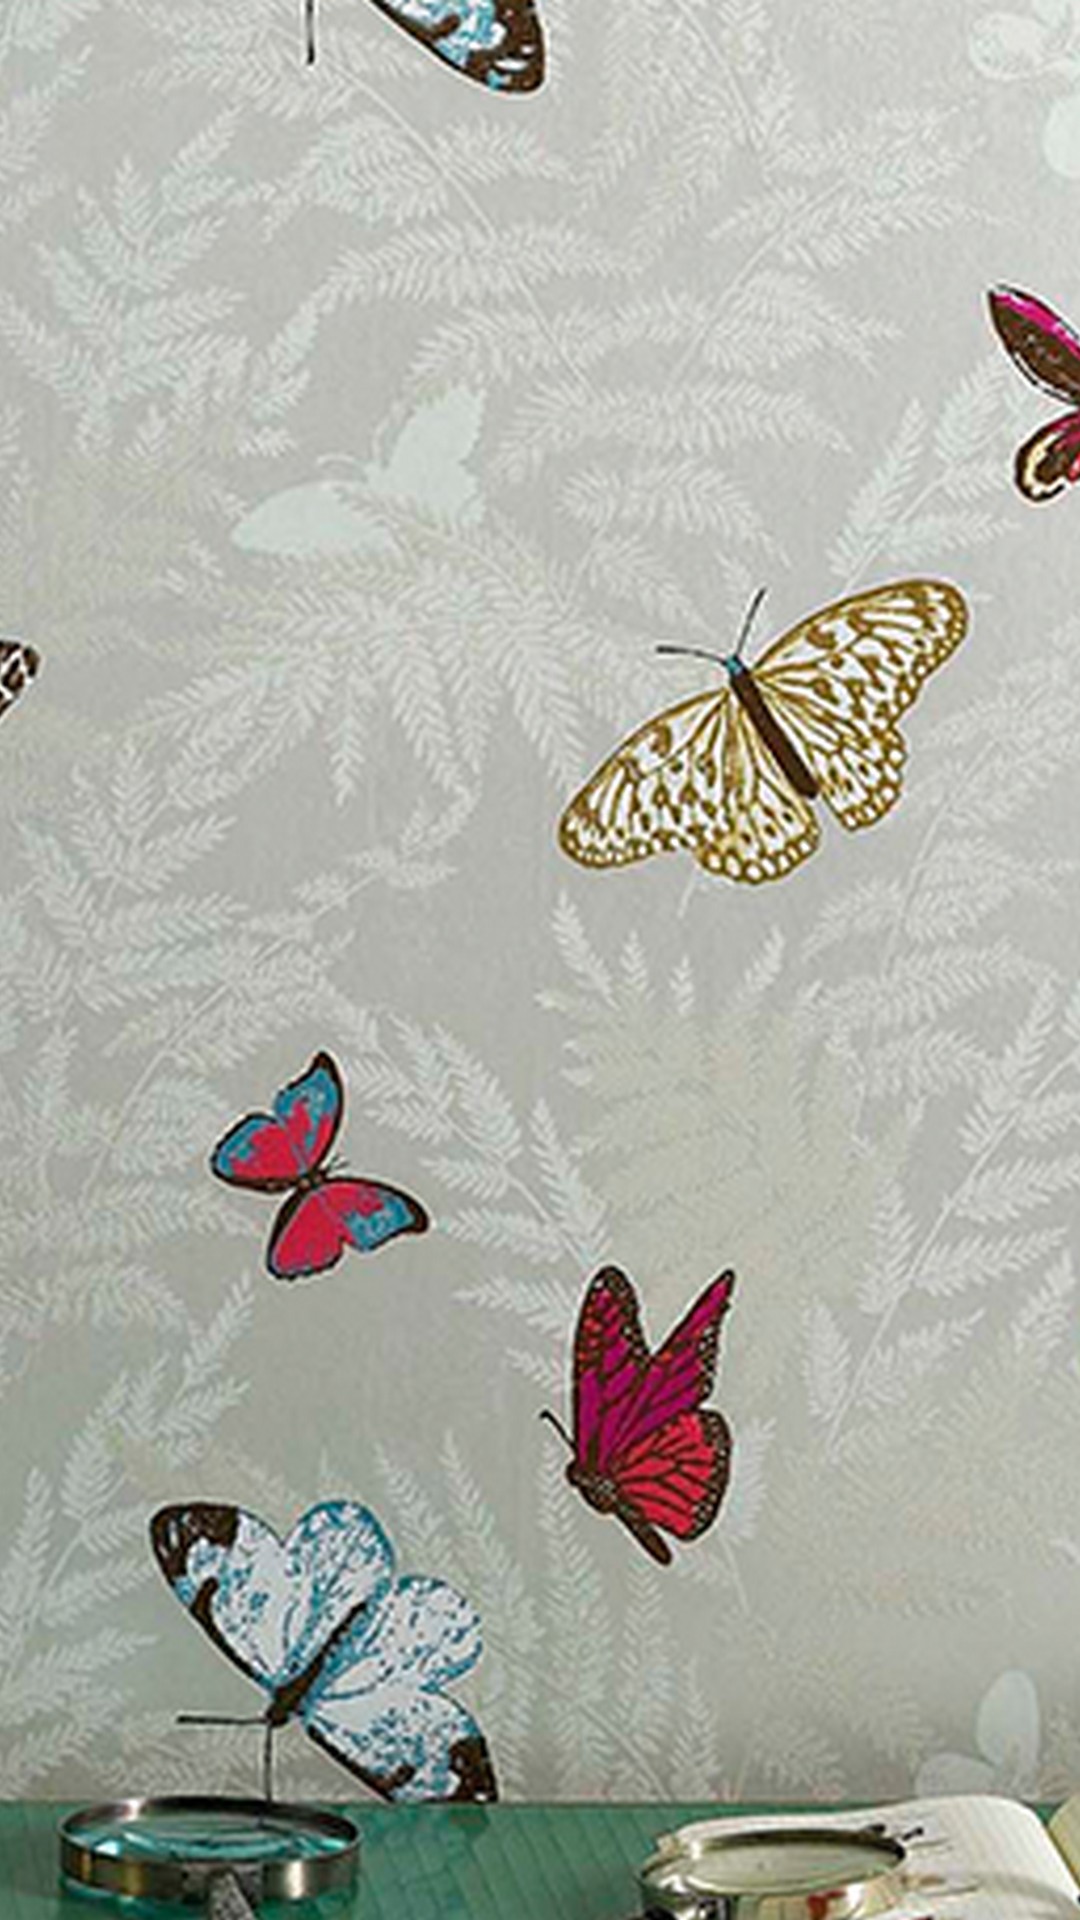 Butterfly Design iPhone Wallpaper resolution 1080x1920